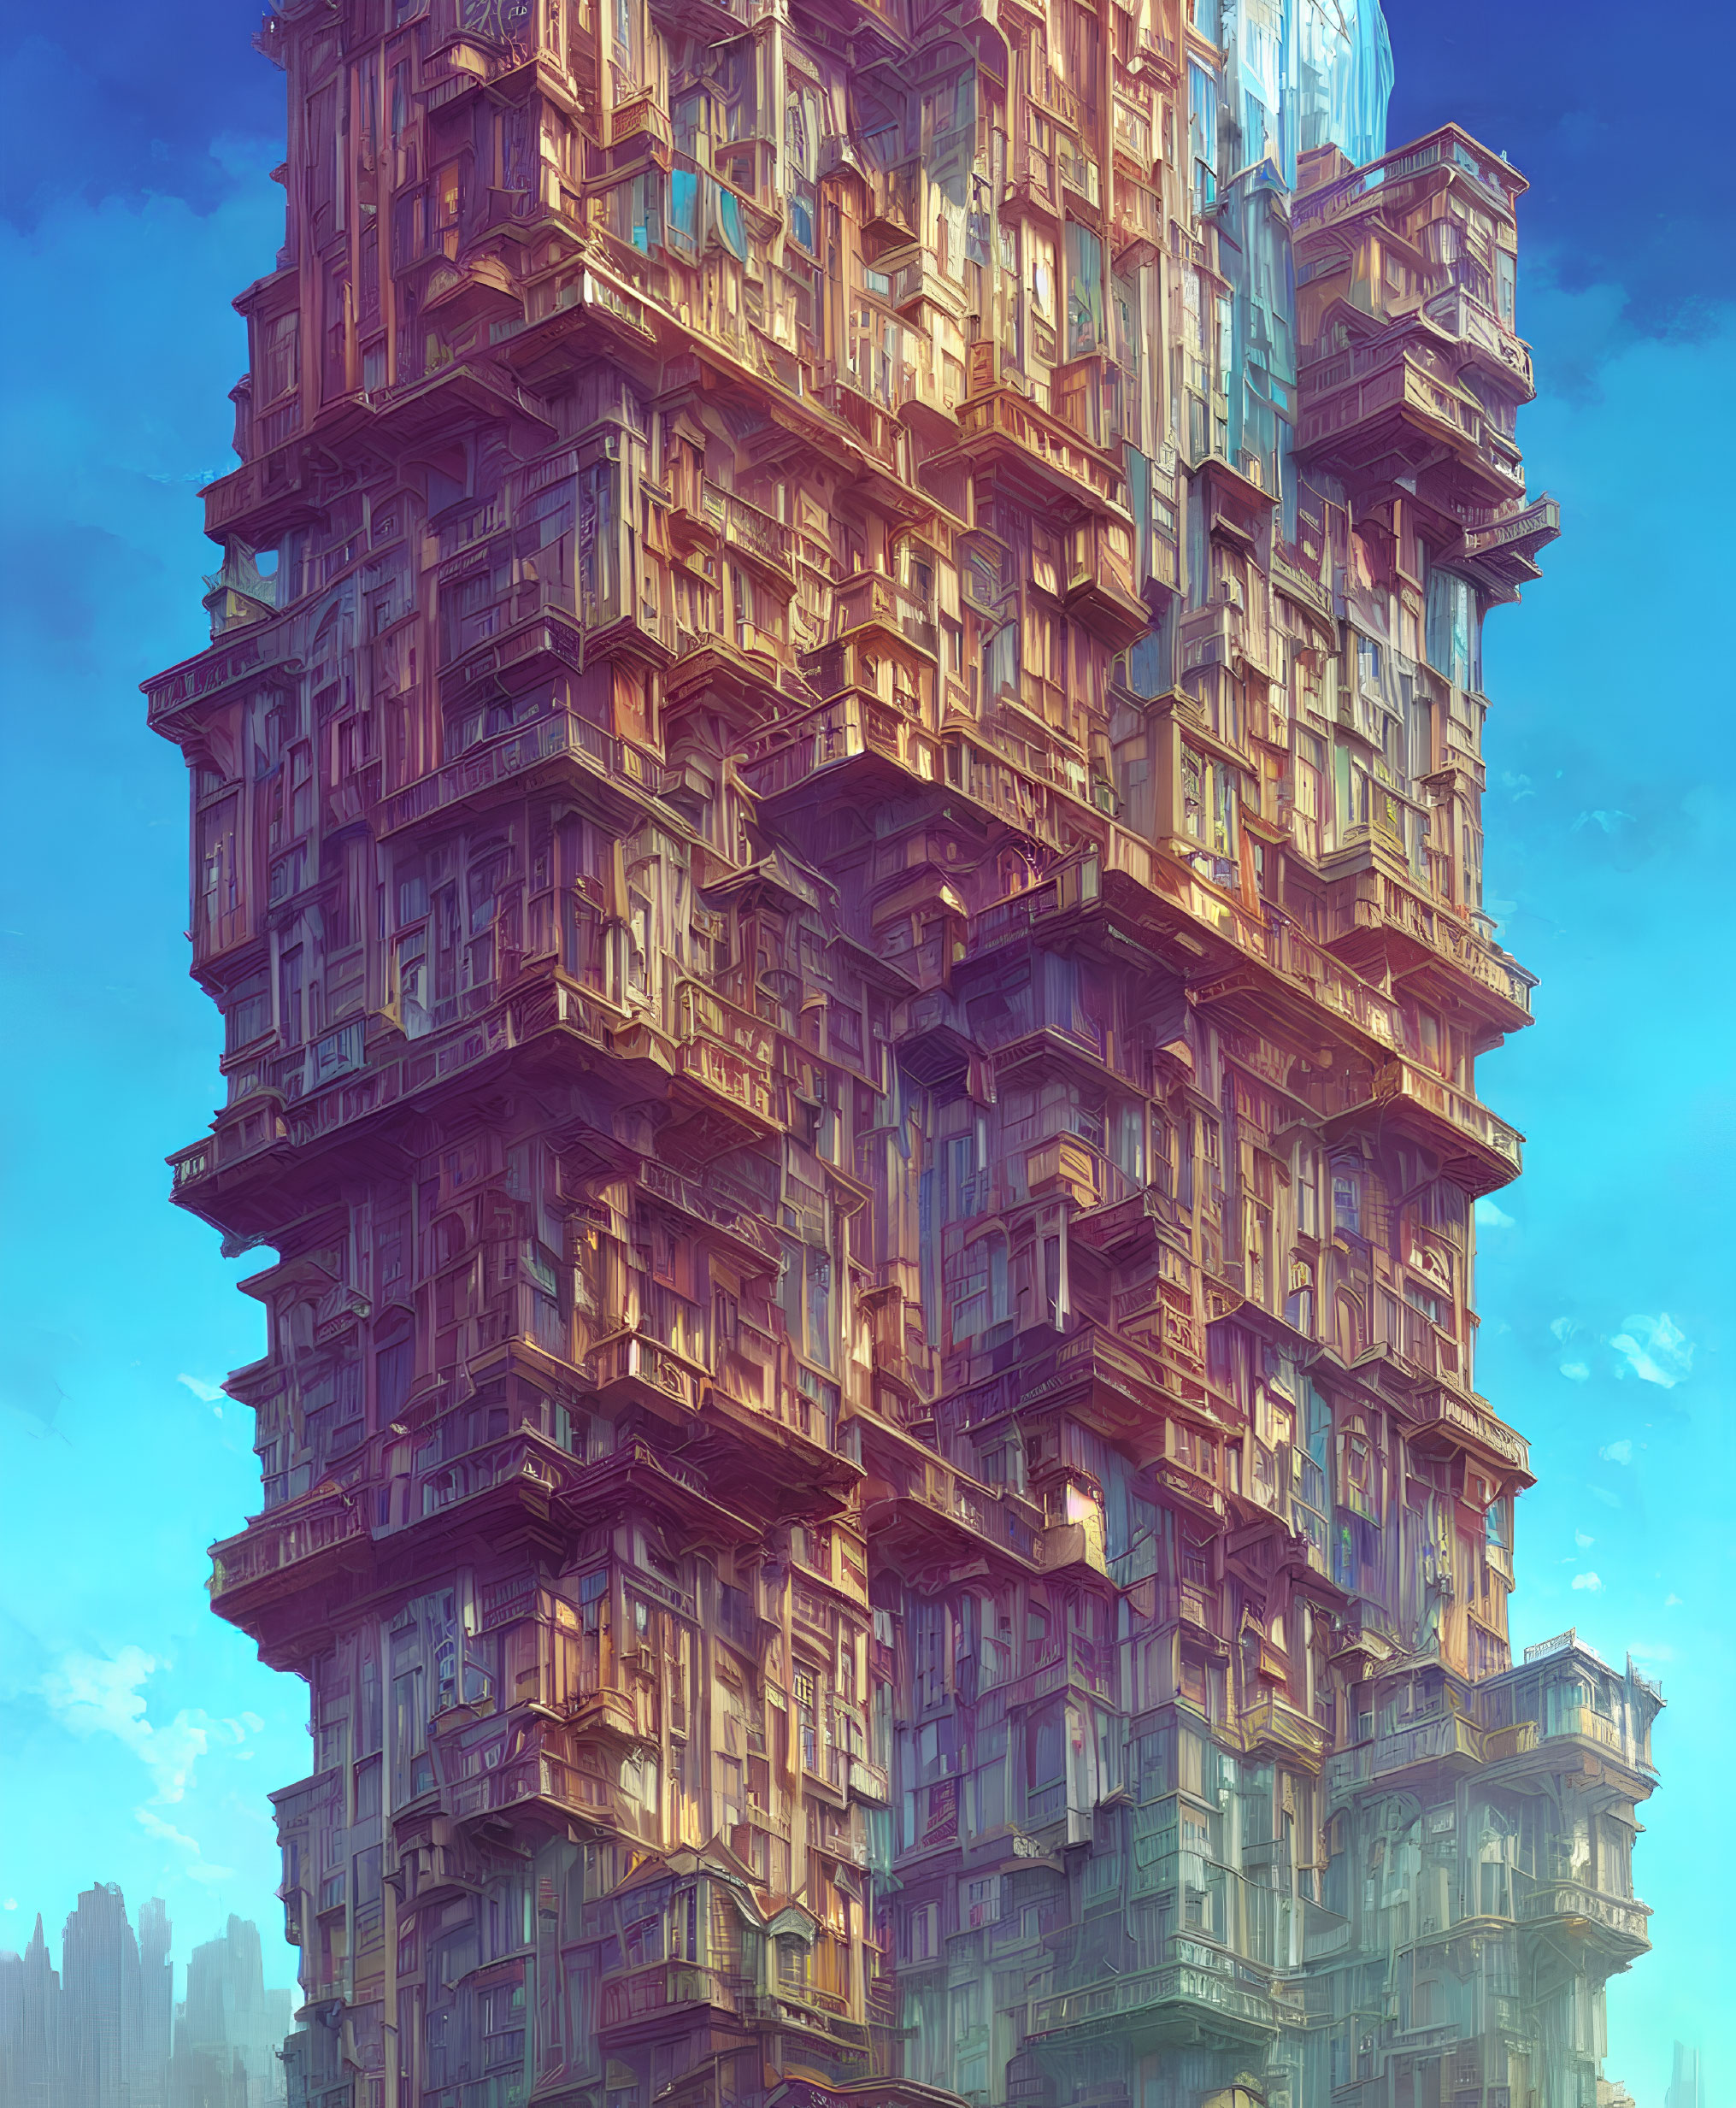 Futuristic skyscraper with intricate stacked design against blue sky